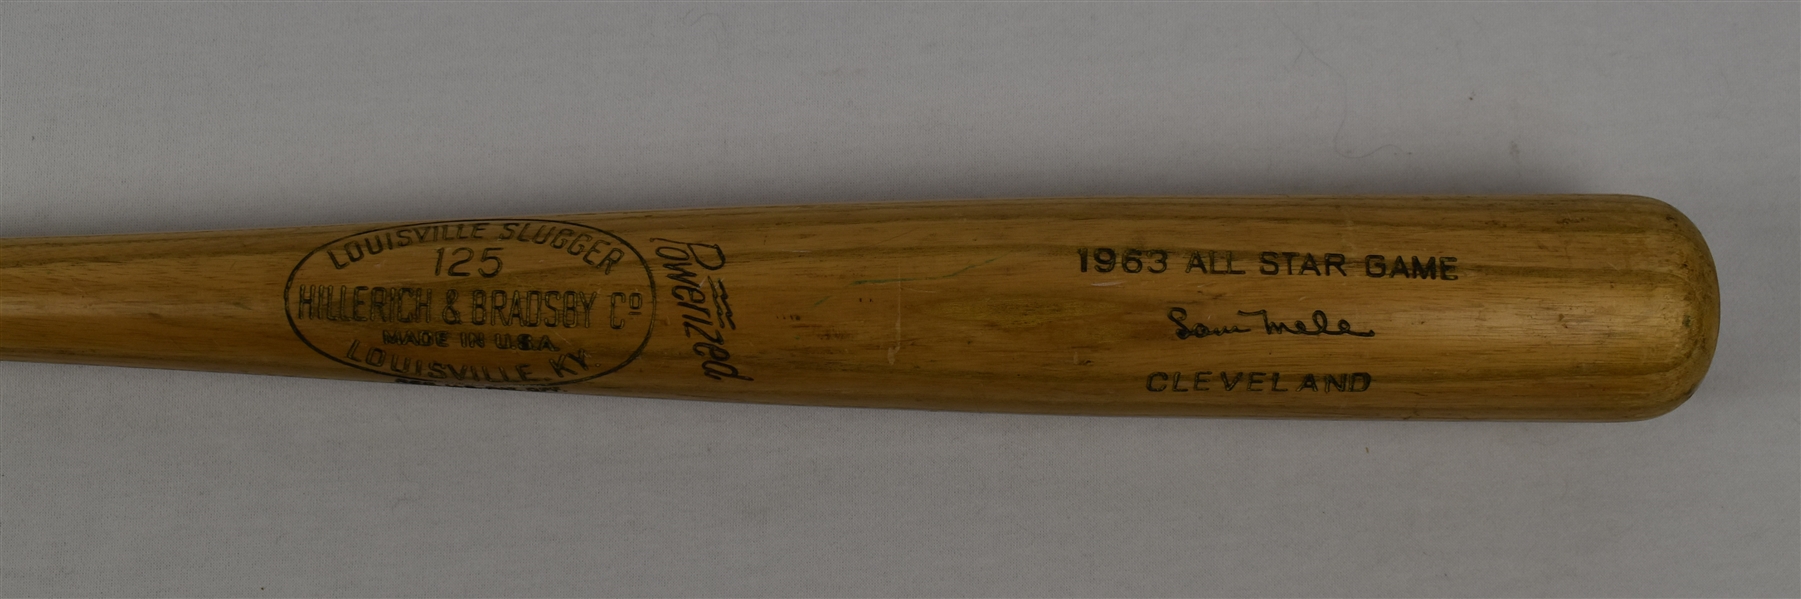 Sam Mele 1963 Minnesota Twins All-Star Game Used Bat PSA/DNA